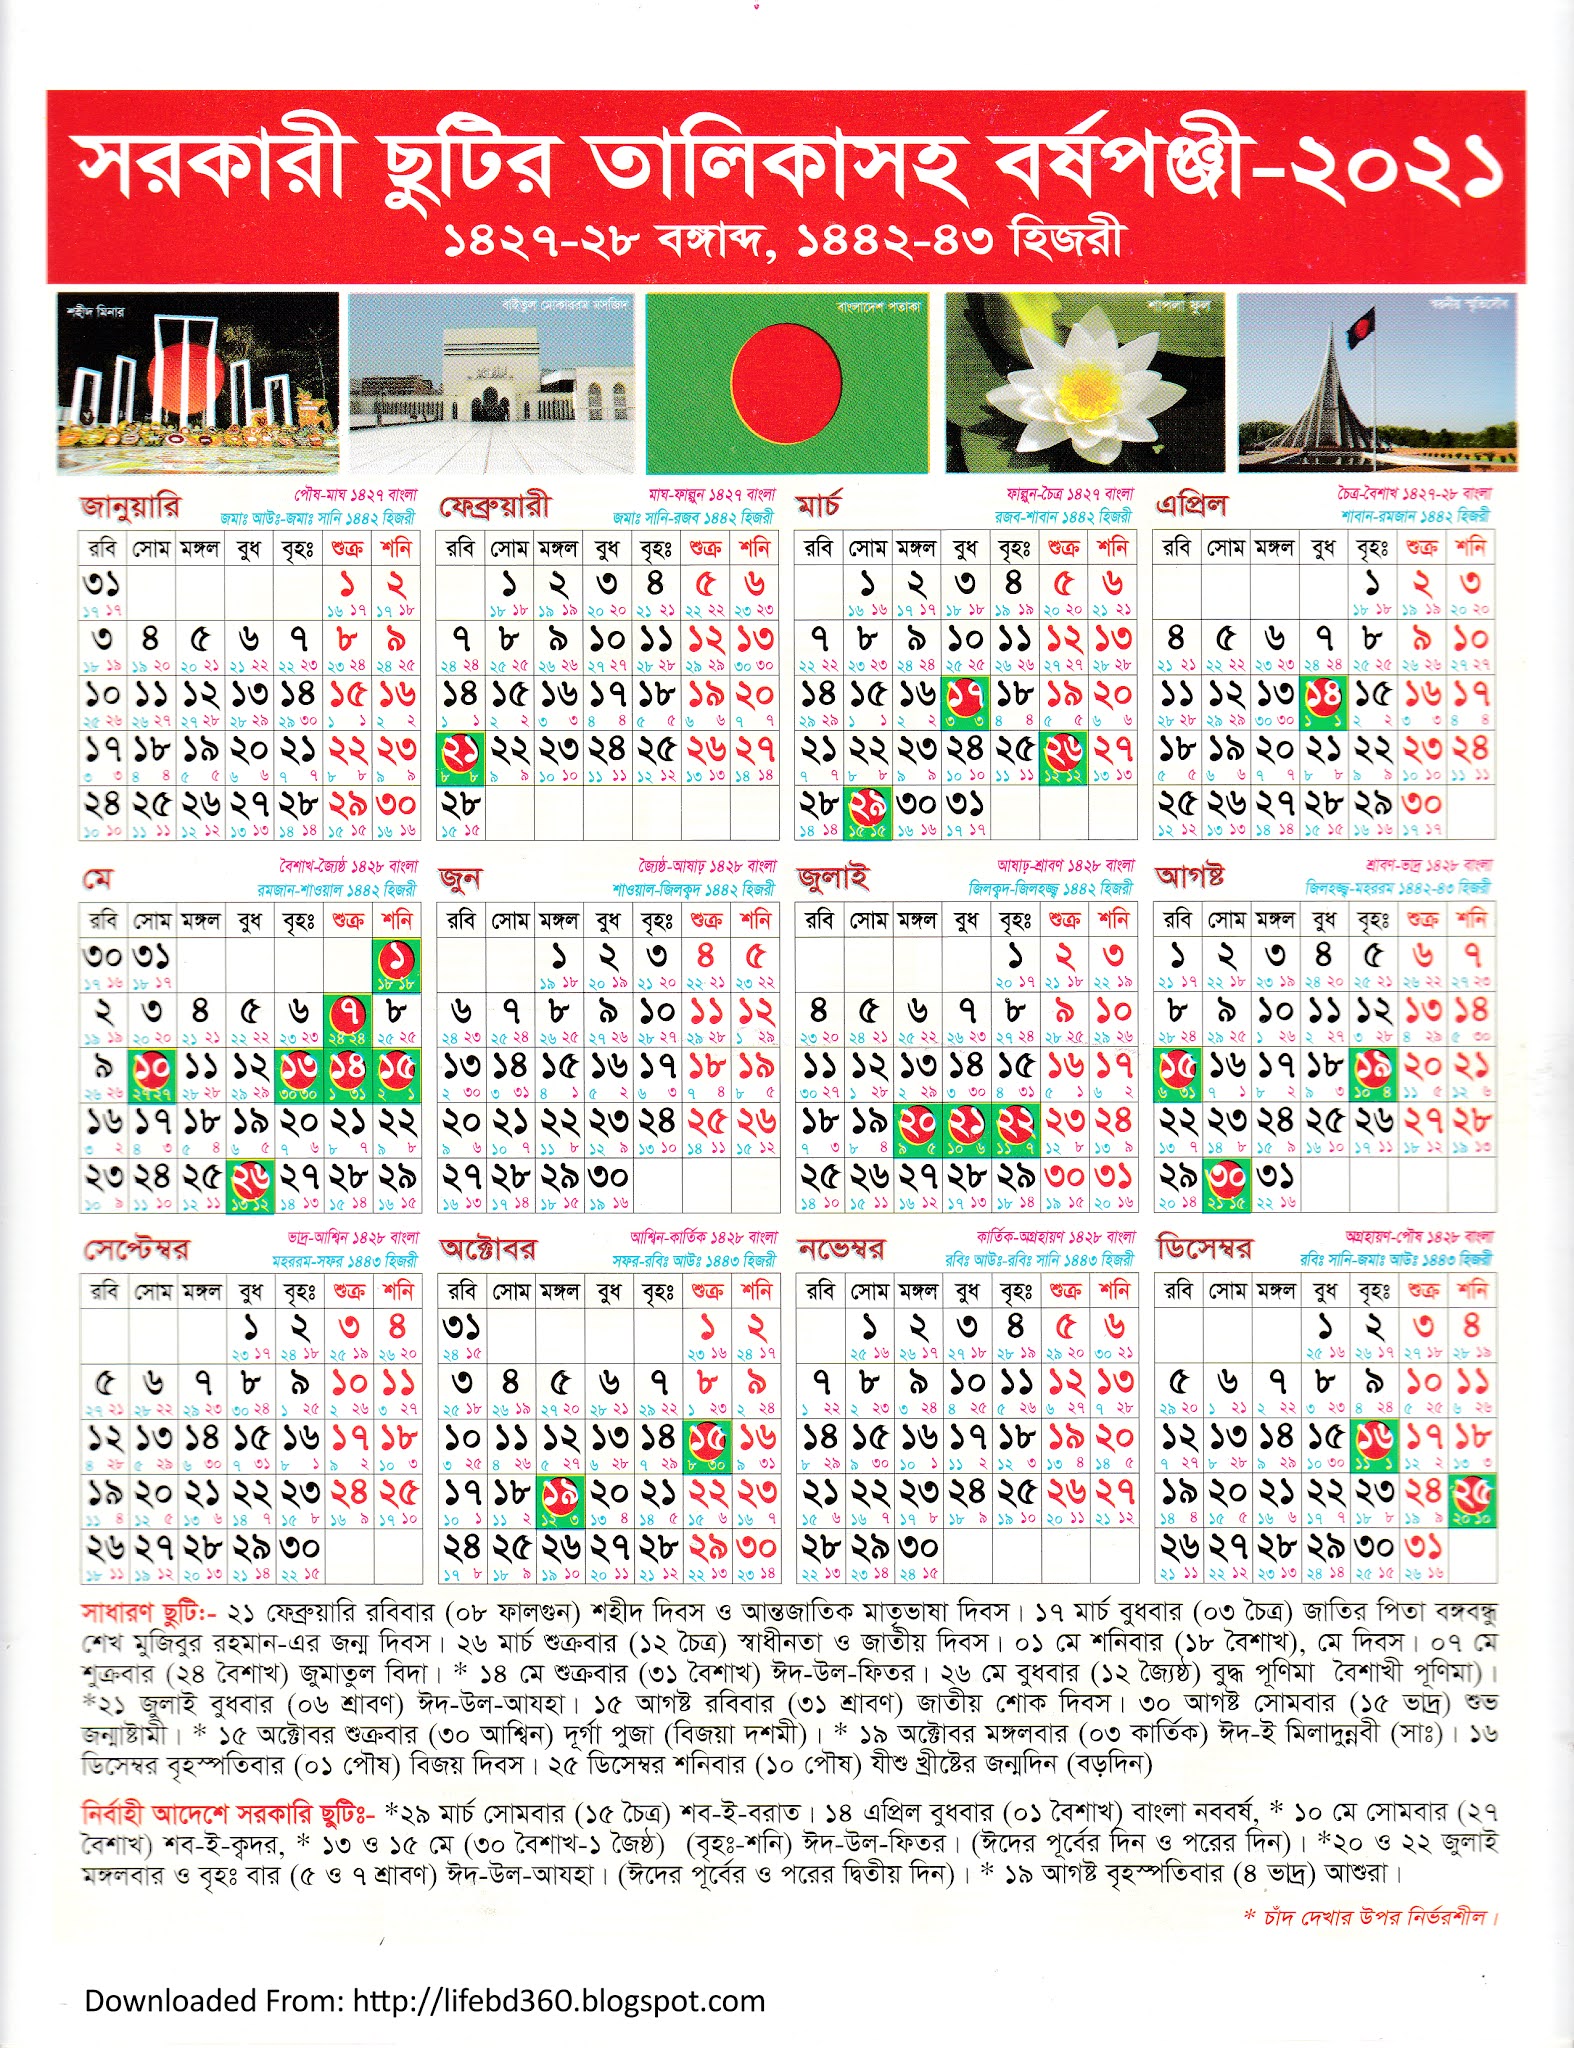 Bangladesh Government Holiday Calendar 2021 Life in Bangladesh